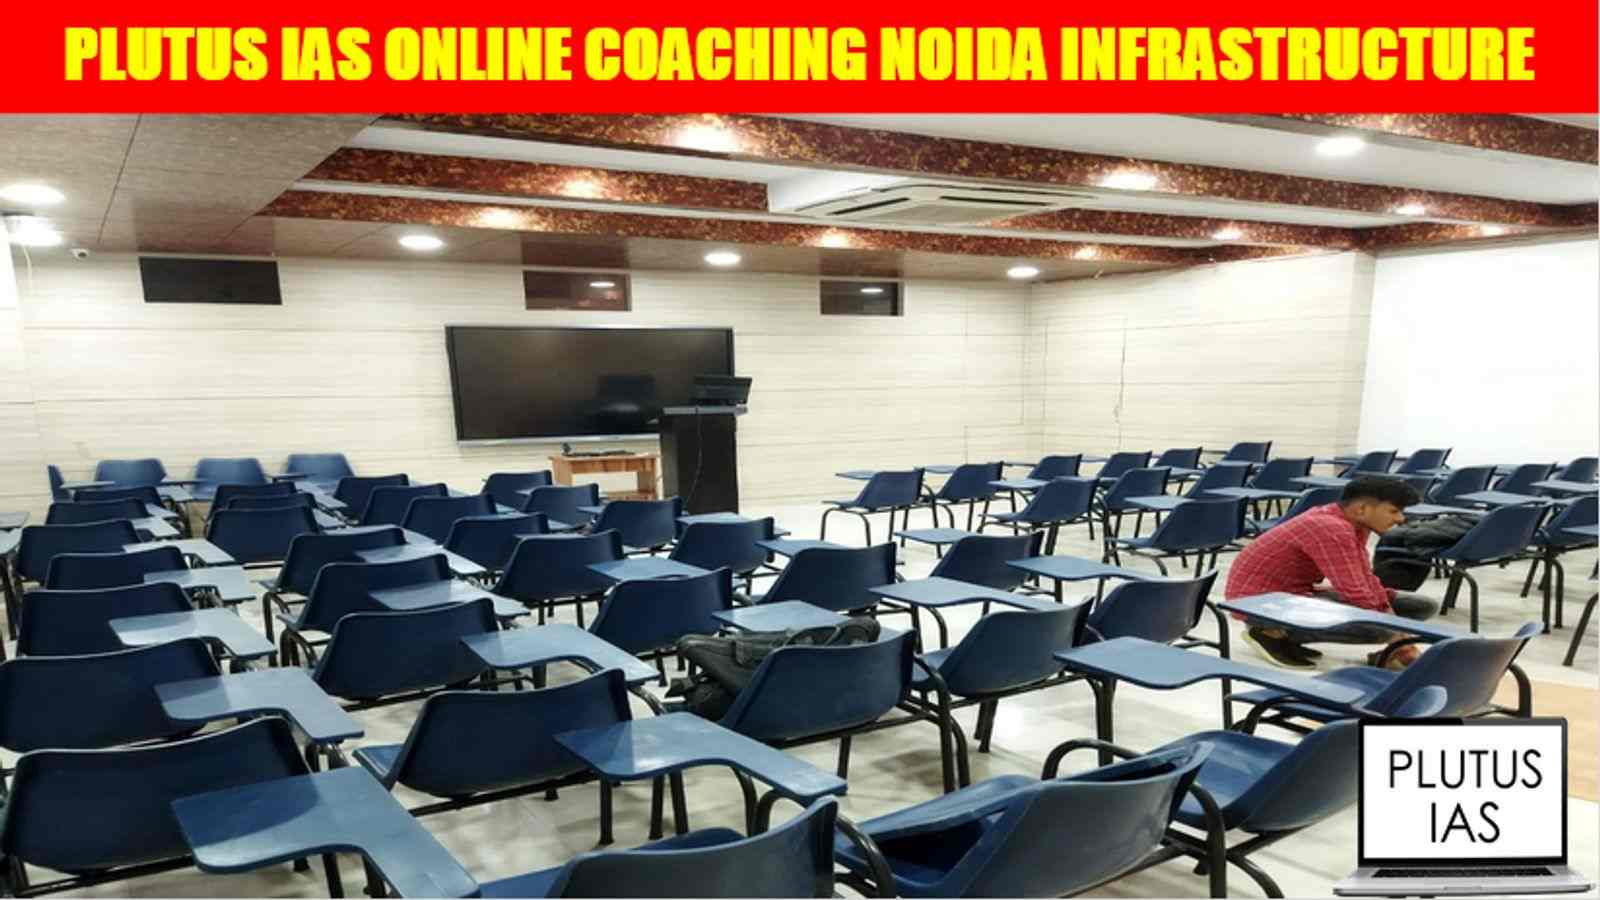 Plutus IAS Online Coaching Noida Infrastructure